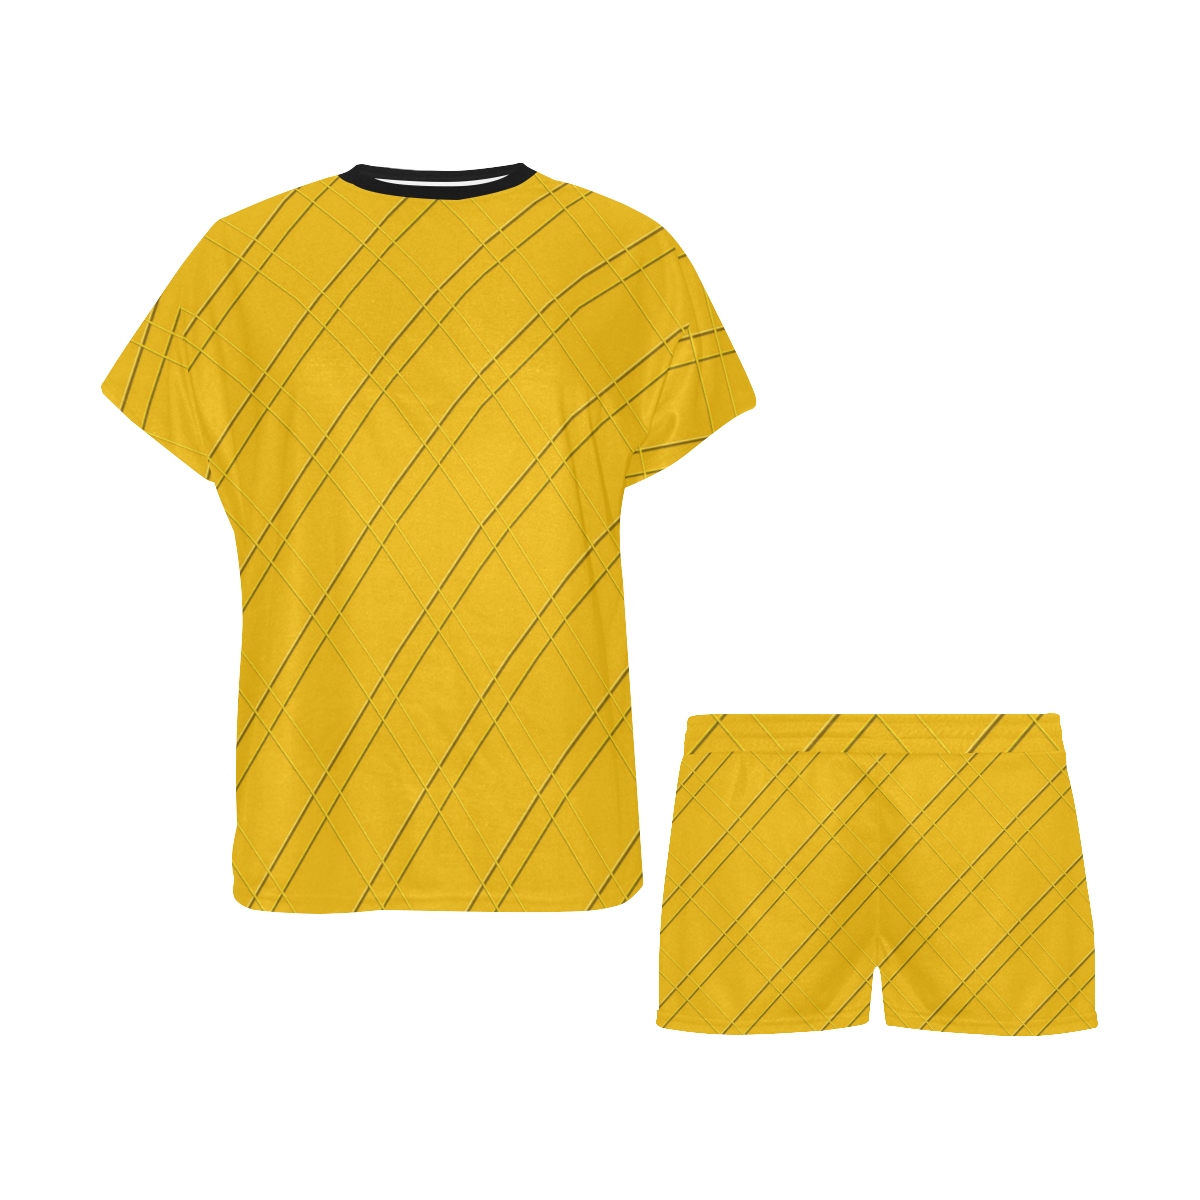 Selective Yellow Crisscross Women's Short Pajama Set